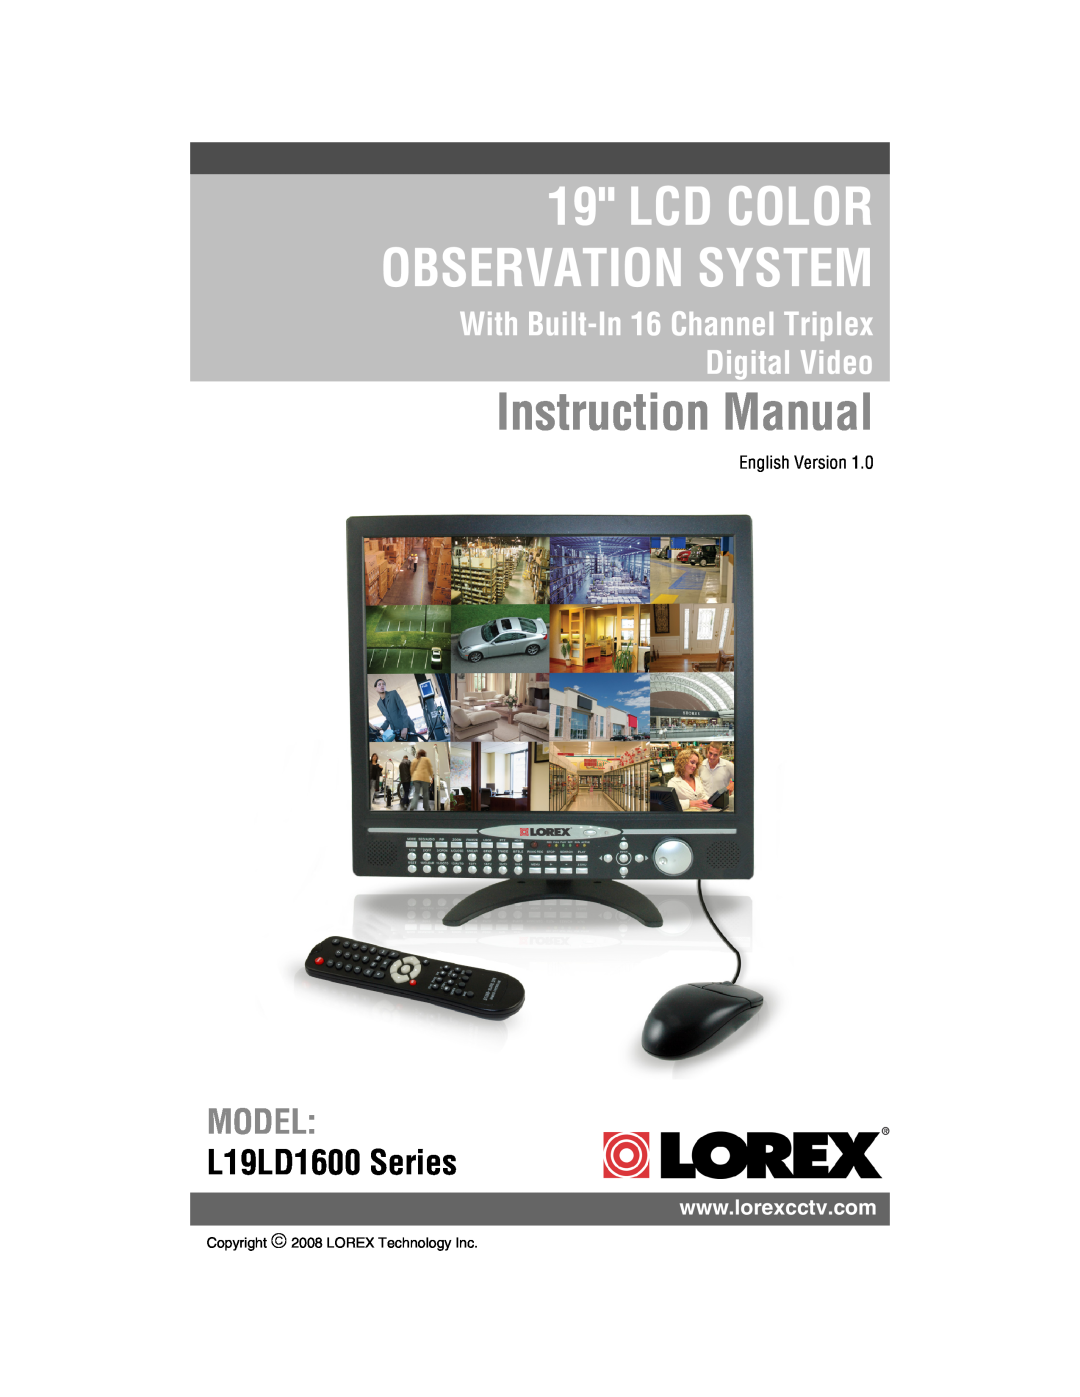 LOREX Technology L19lD1616501 instruction manual L19LD1600 Series, Lcd Color Observation System, Model 